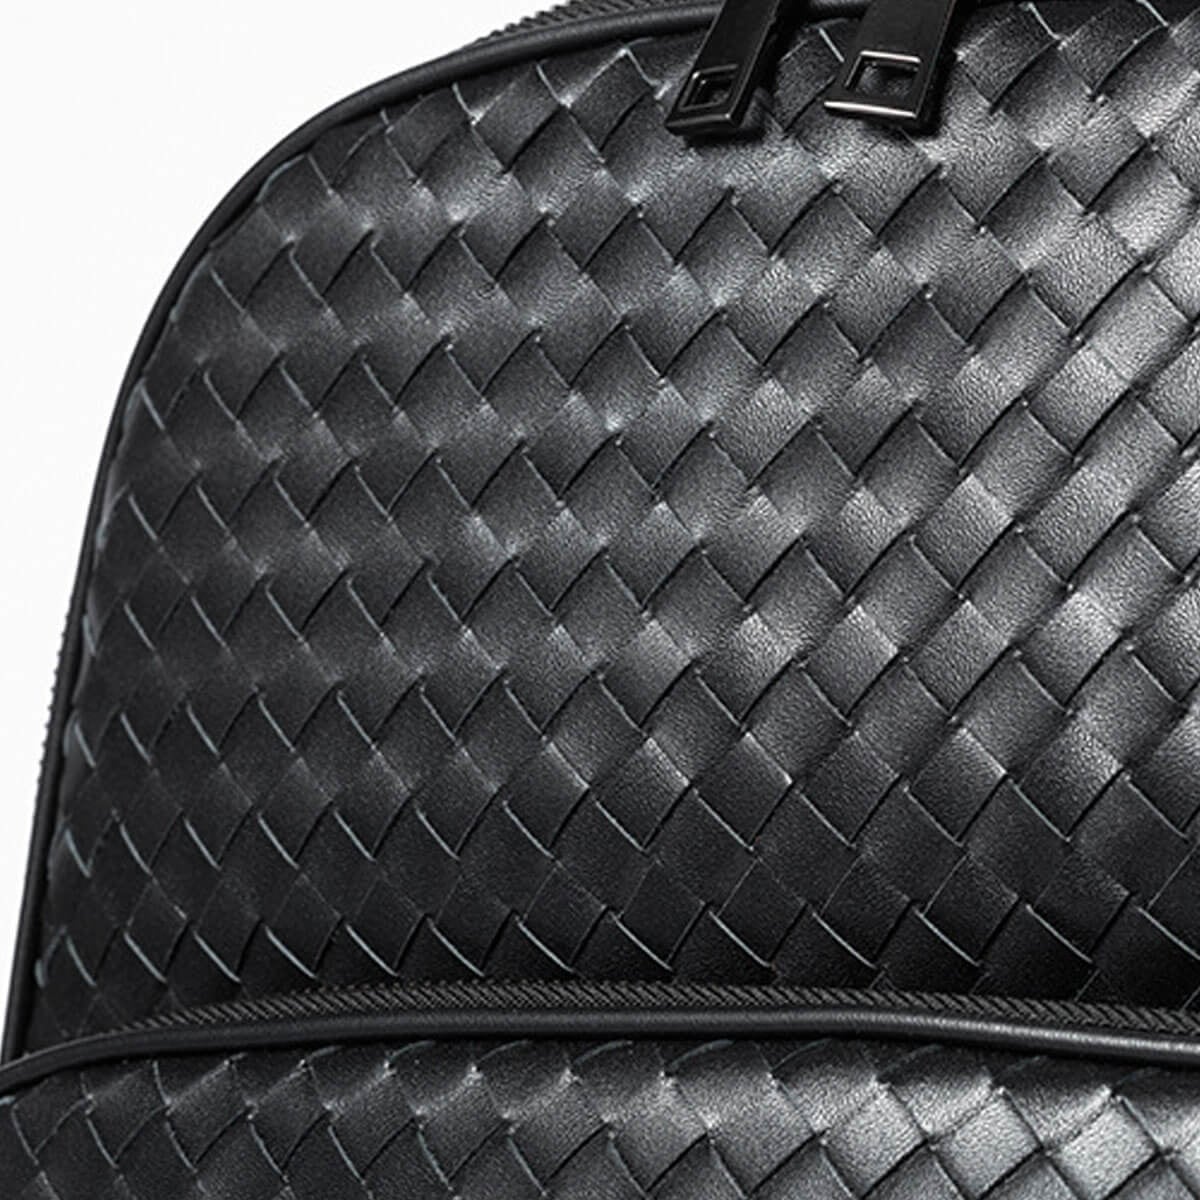 Genuine Leather Fashion Luxury Black Backpack